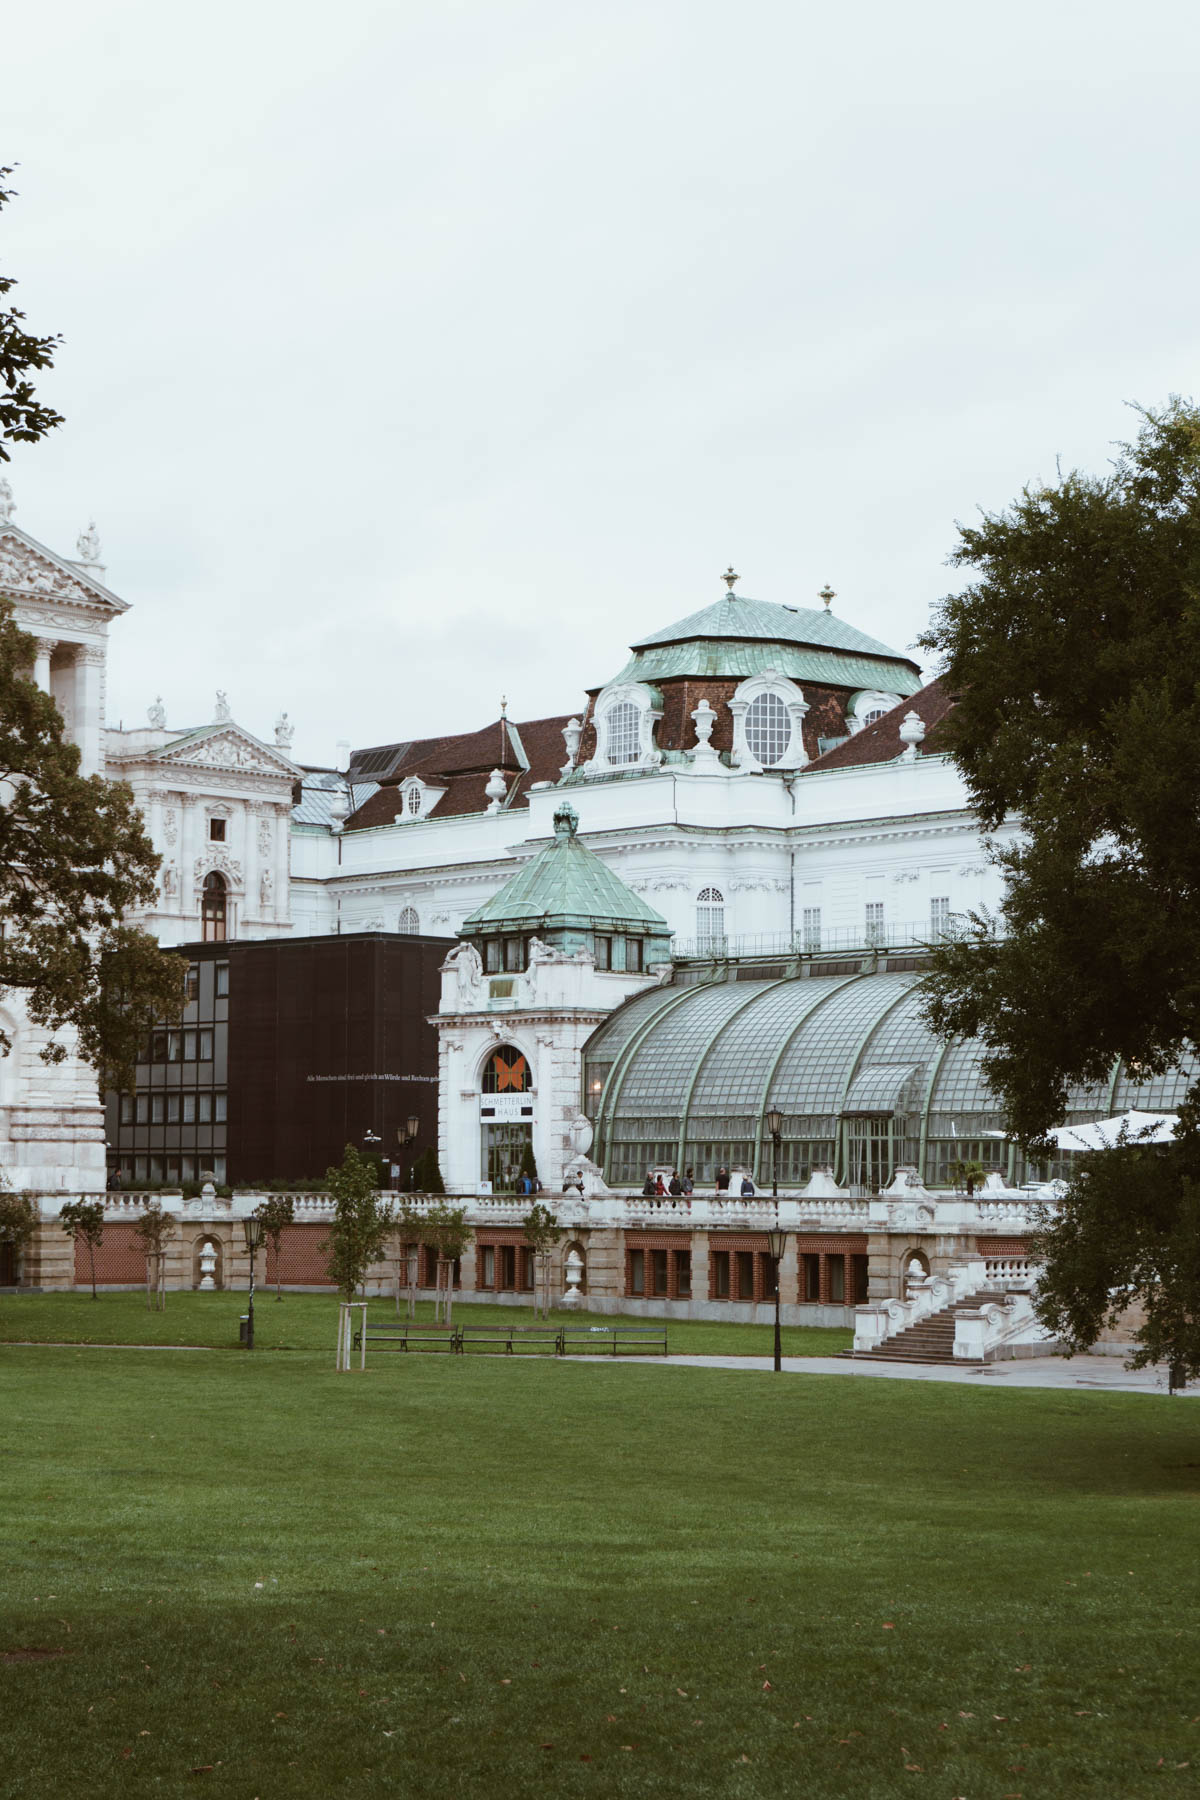 Vienna Austria Travel Guide - Park // RG Daily Blog